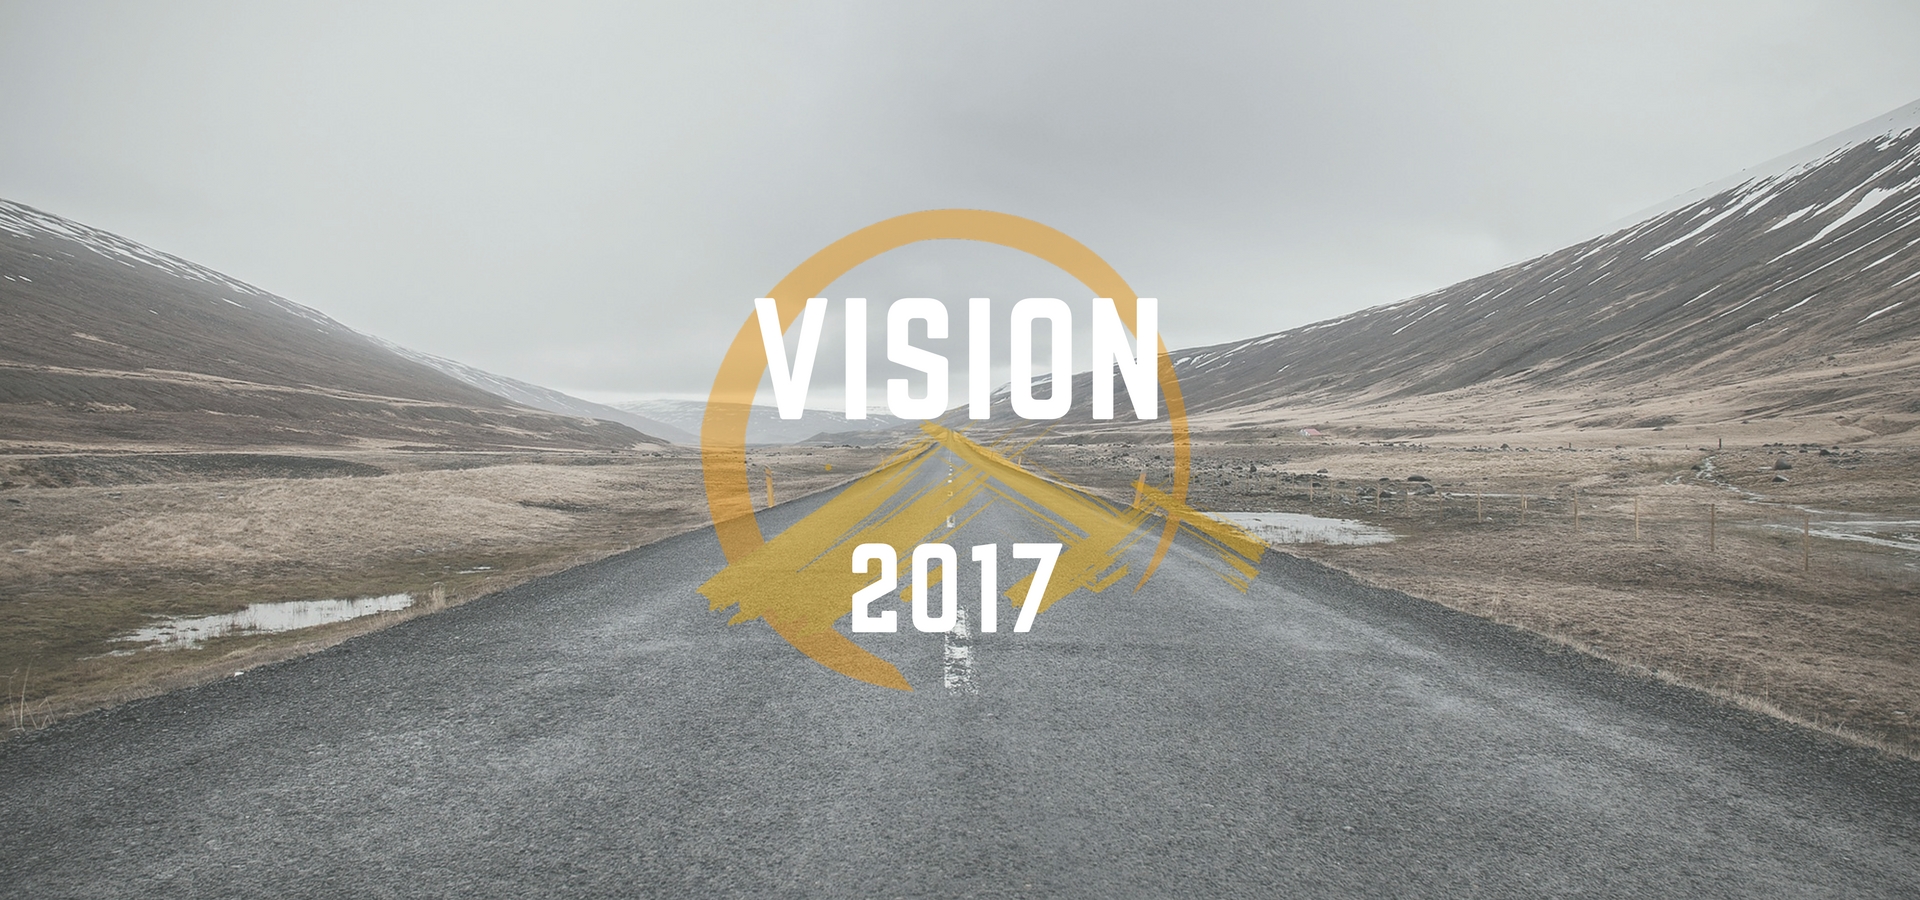 Vision 2017